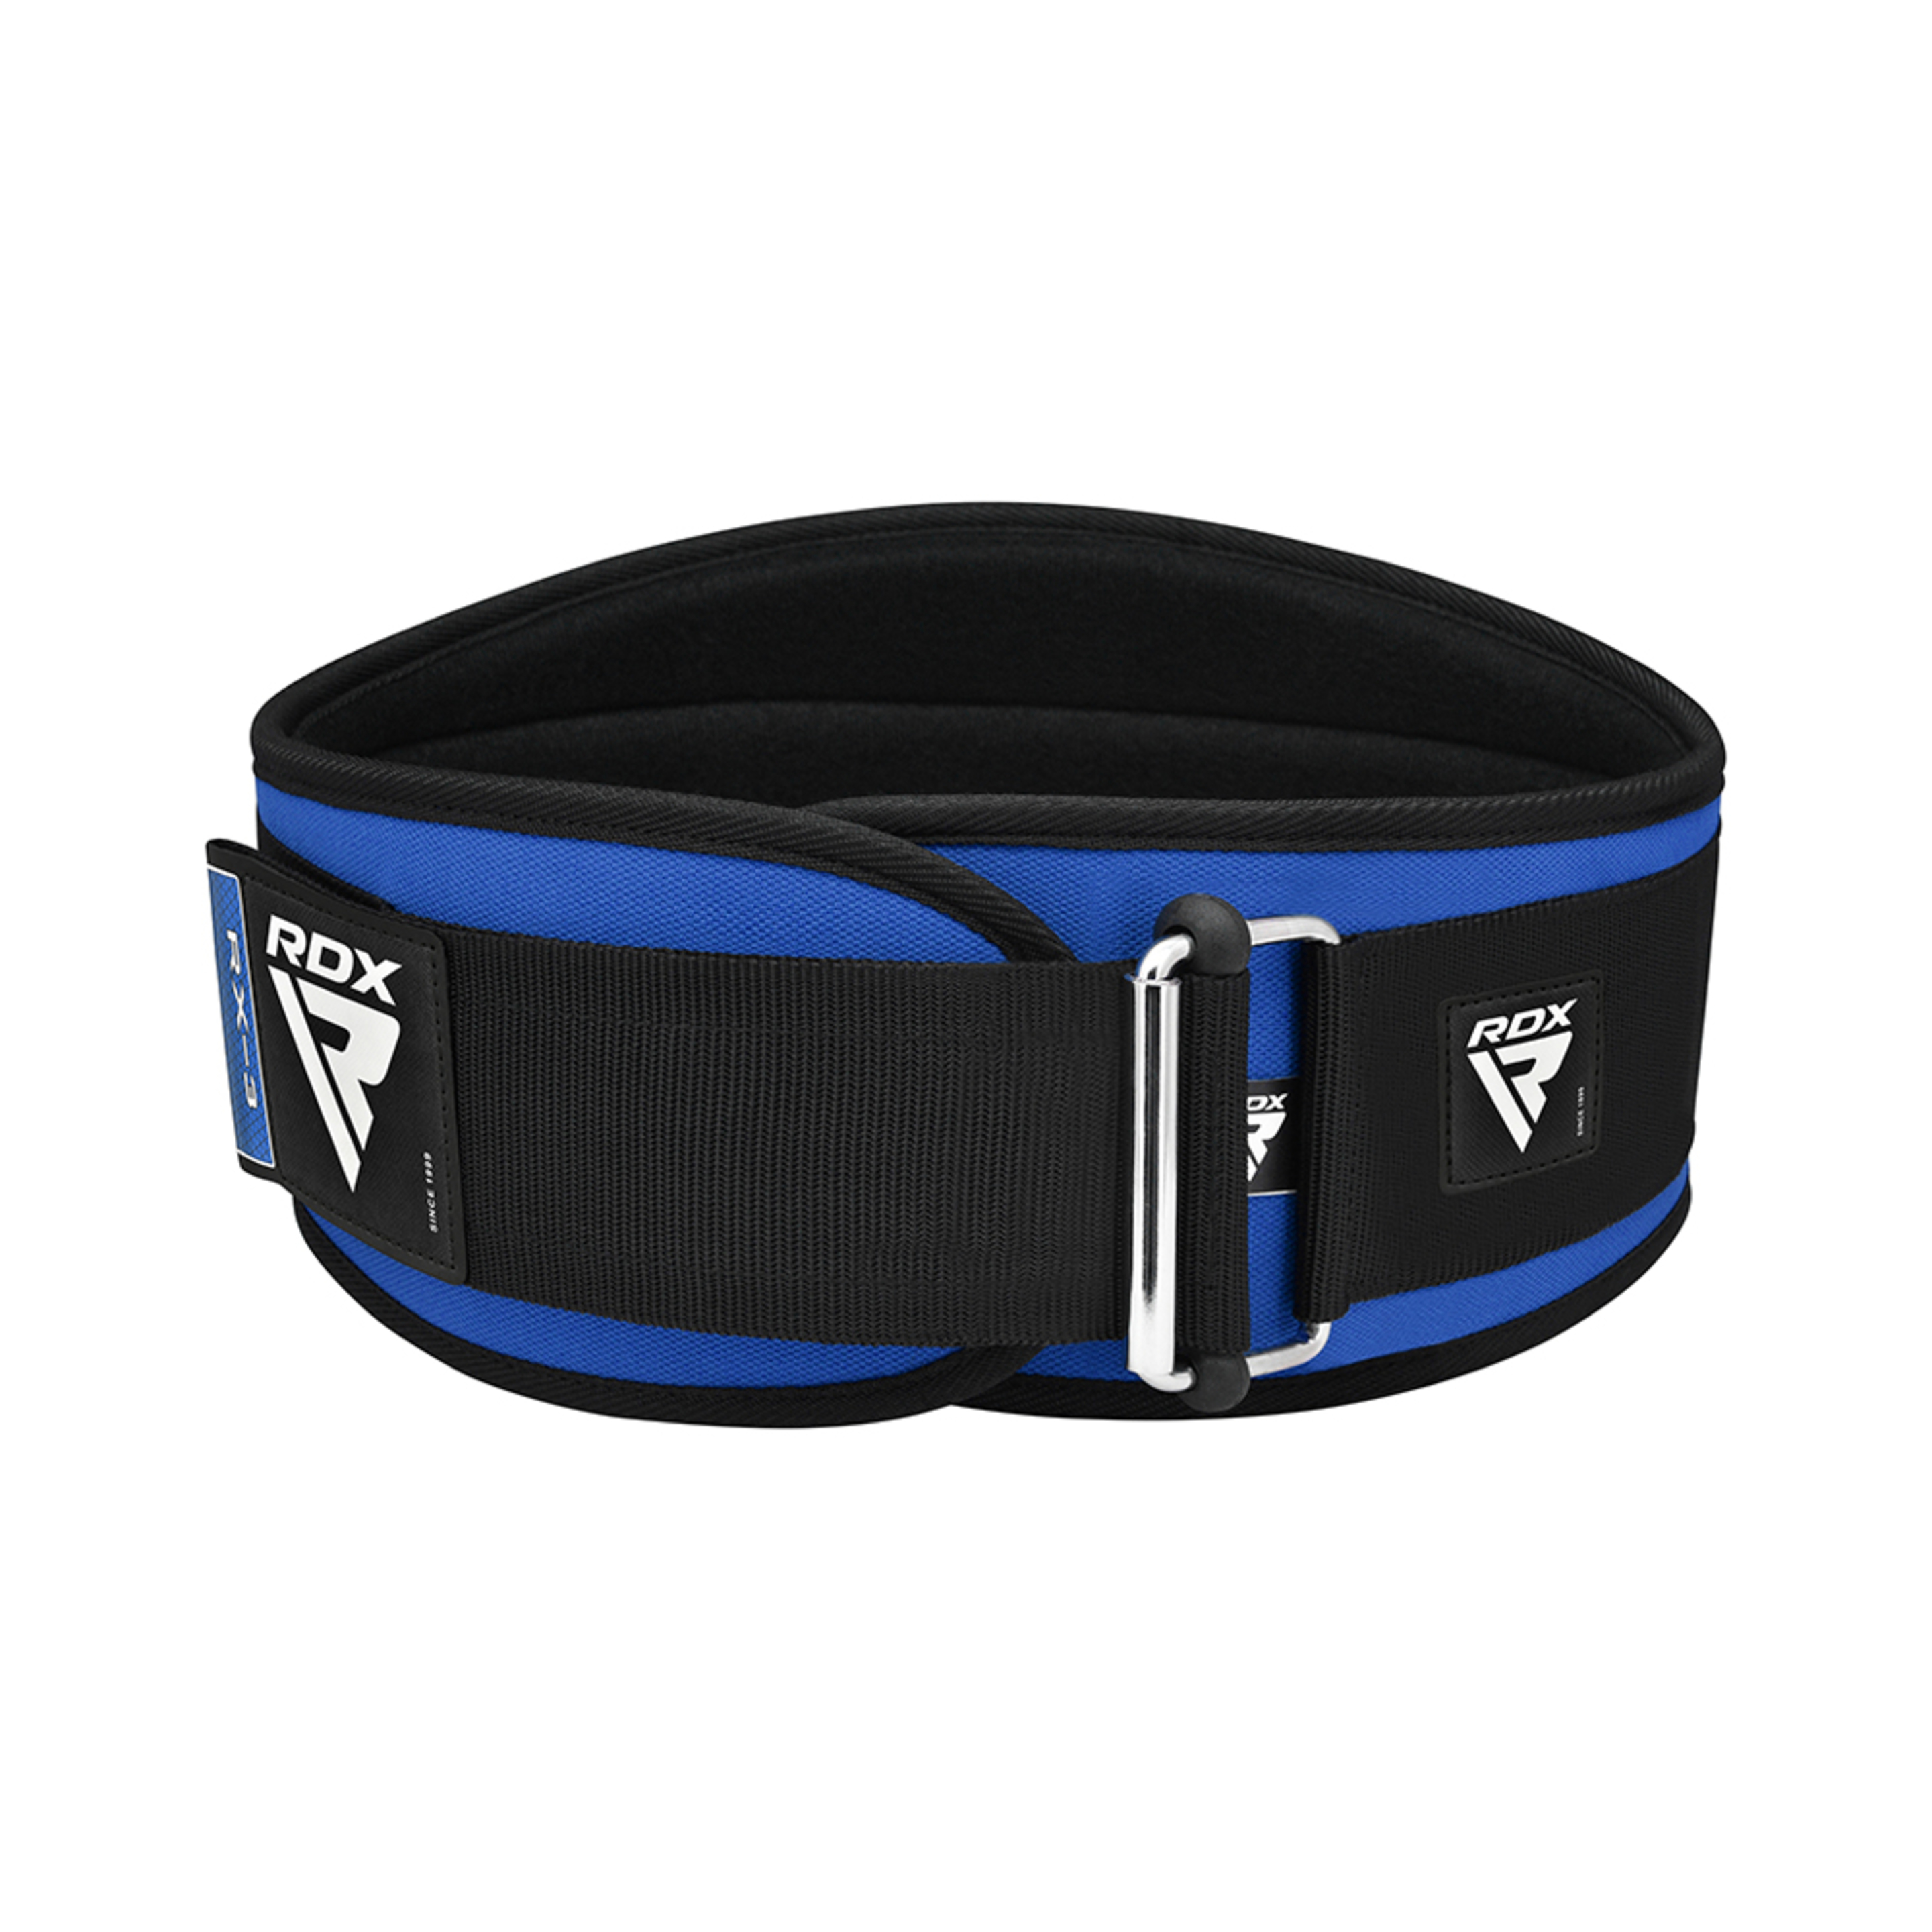 Cinturón De Fitness Rdx Wbe-rx3 - azul - 